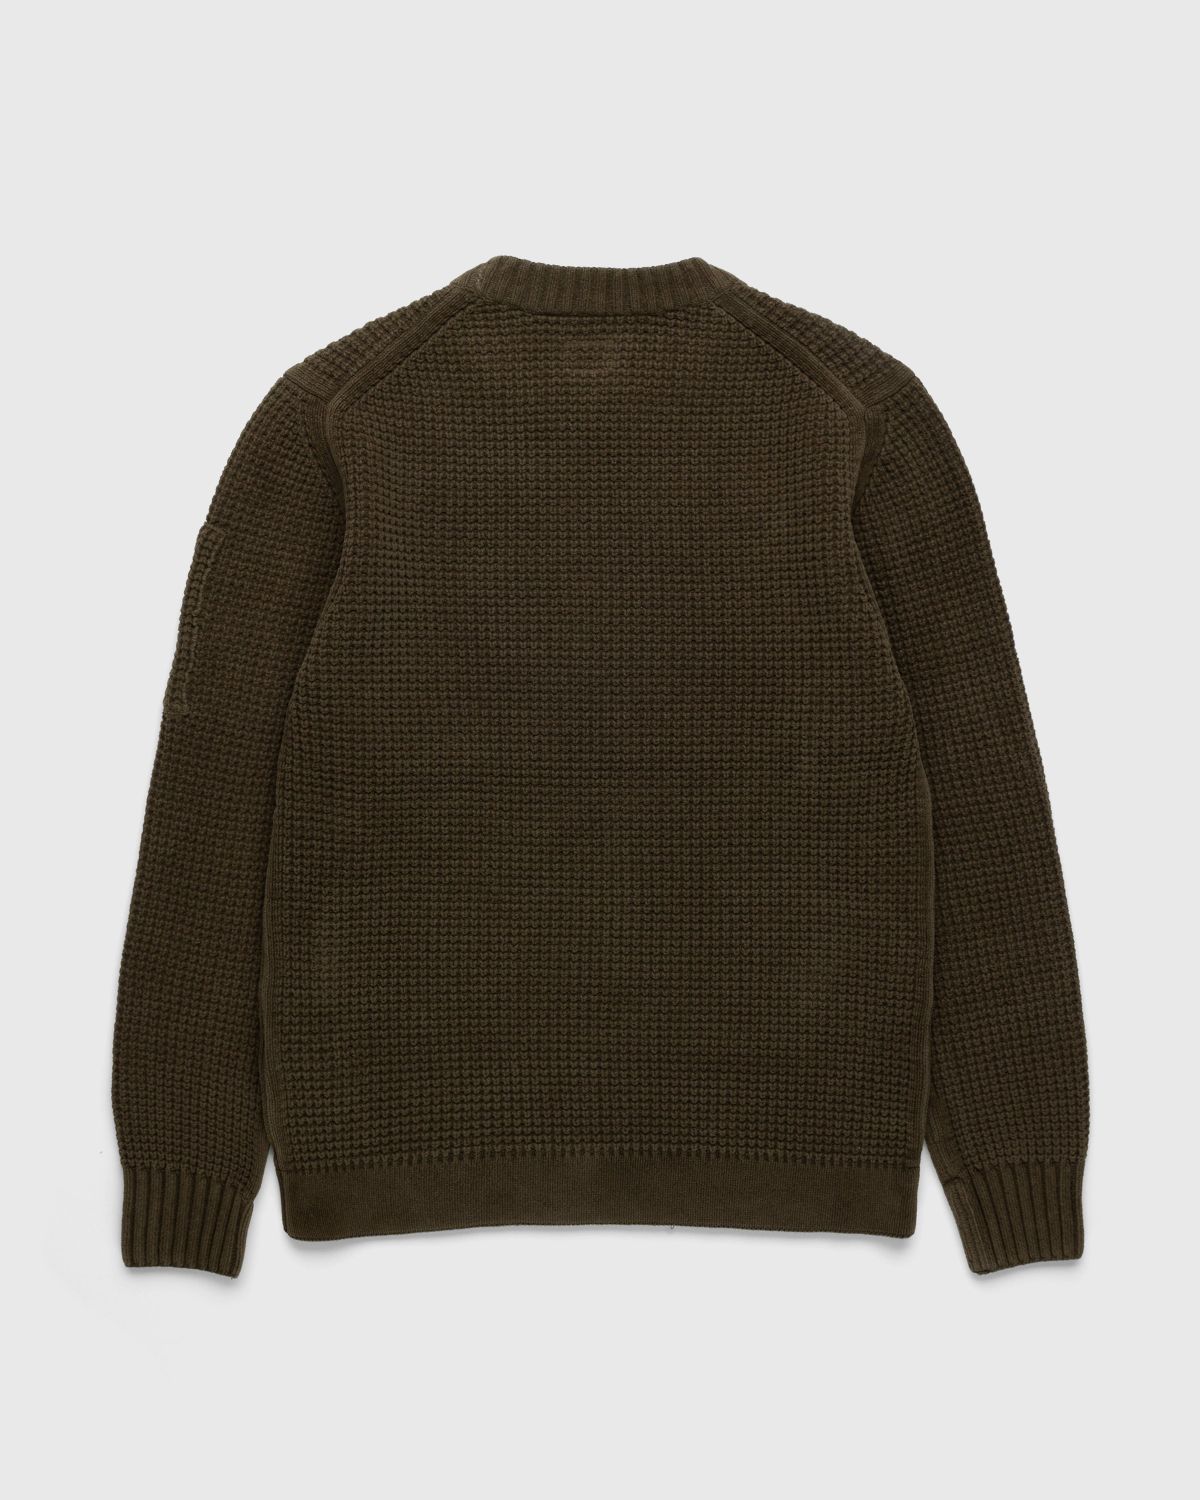 C.P. Company – Chenille Cotton Jumper Green - Knitwear - Green - Image 2